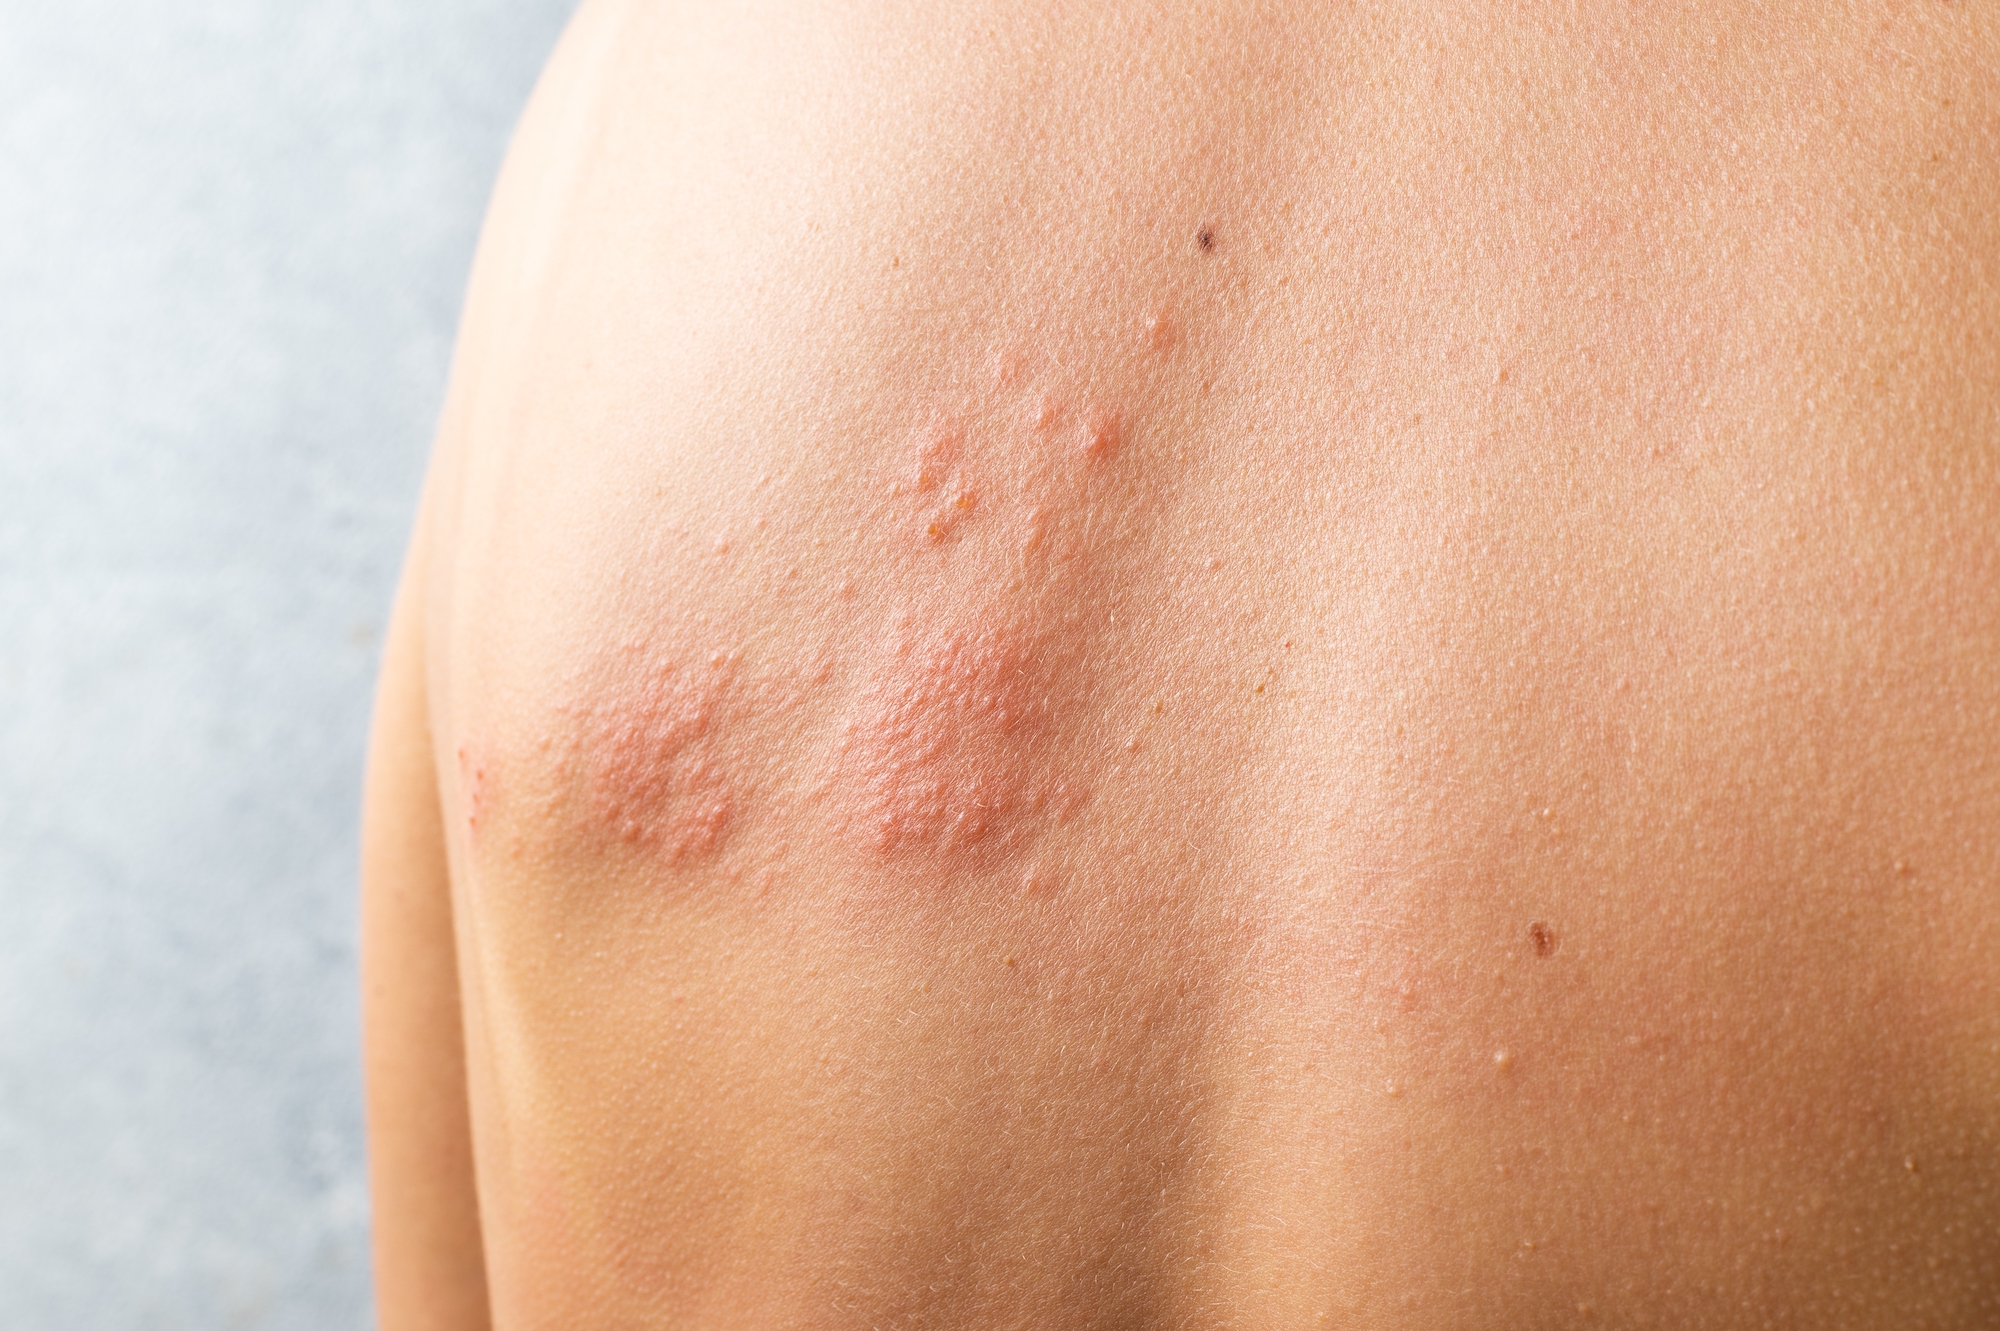 Skin infected Herpes zoster virus. Herpes Virus on body. urticaria rash. atopic dermatitis on body.